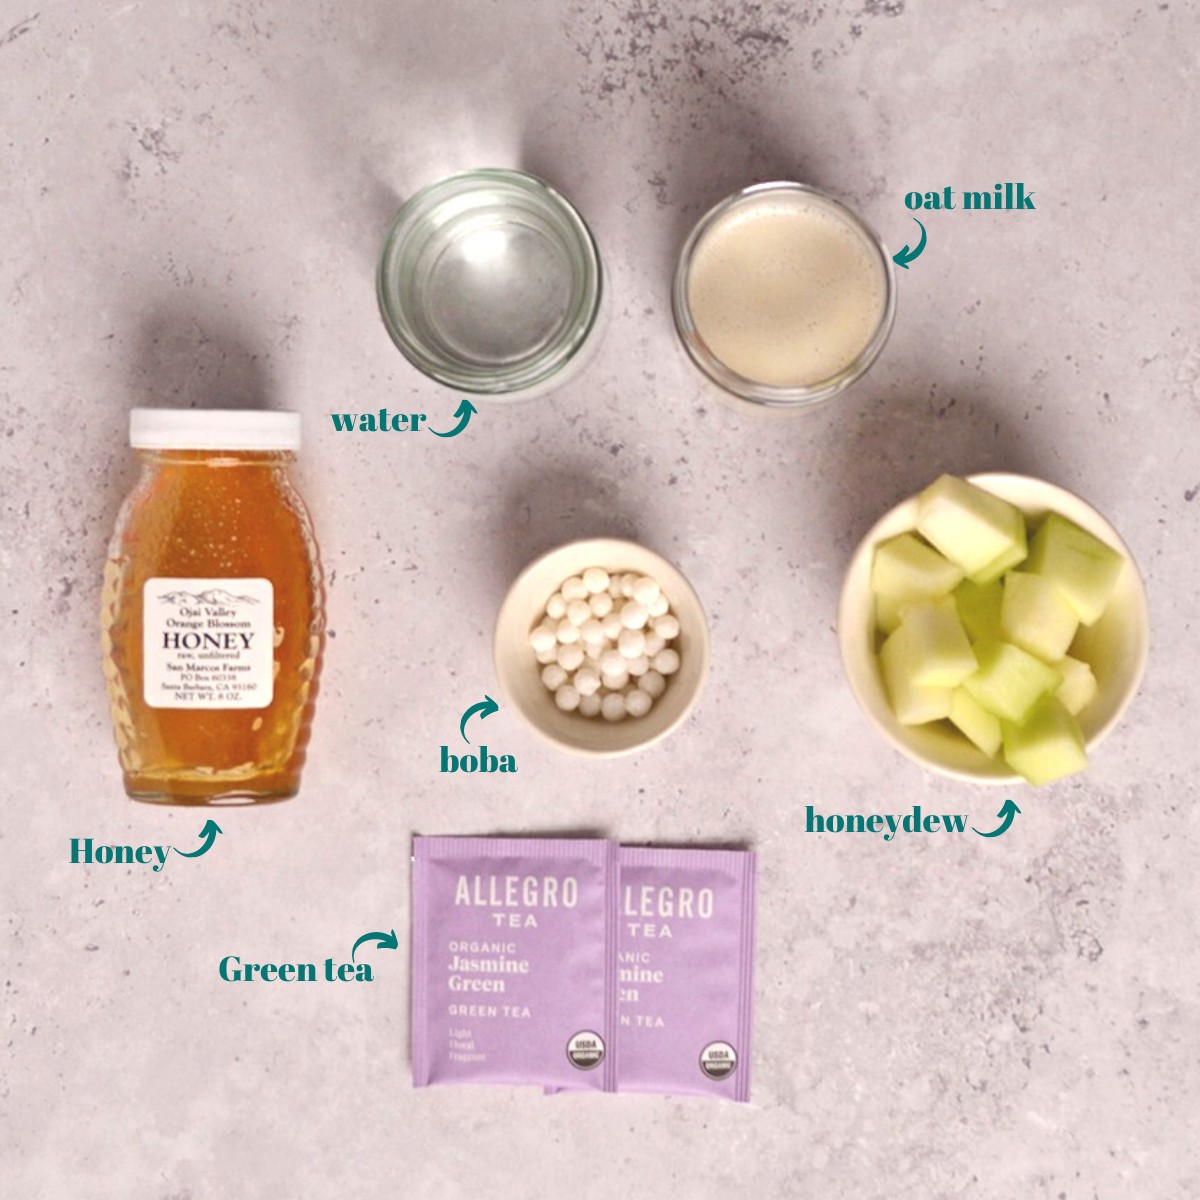 Overhead view of honeydew, boba pearls, and tea ingredients.